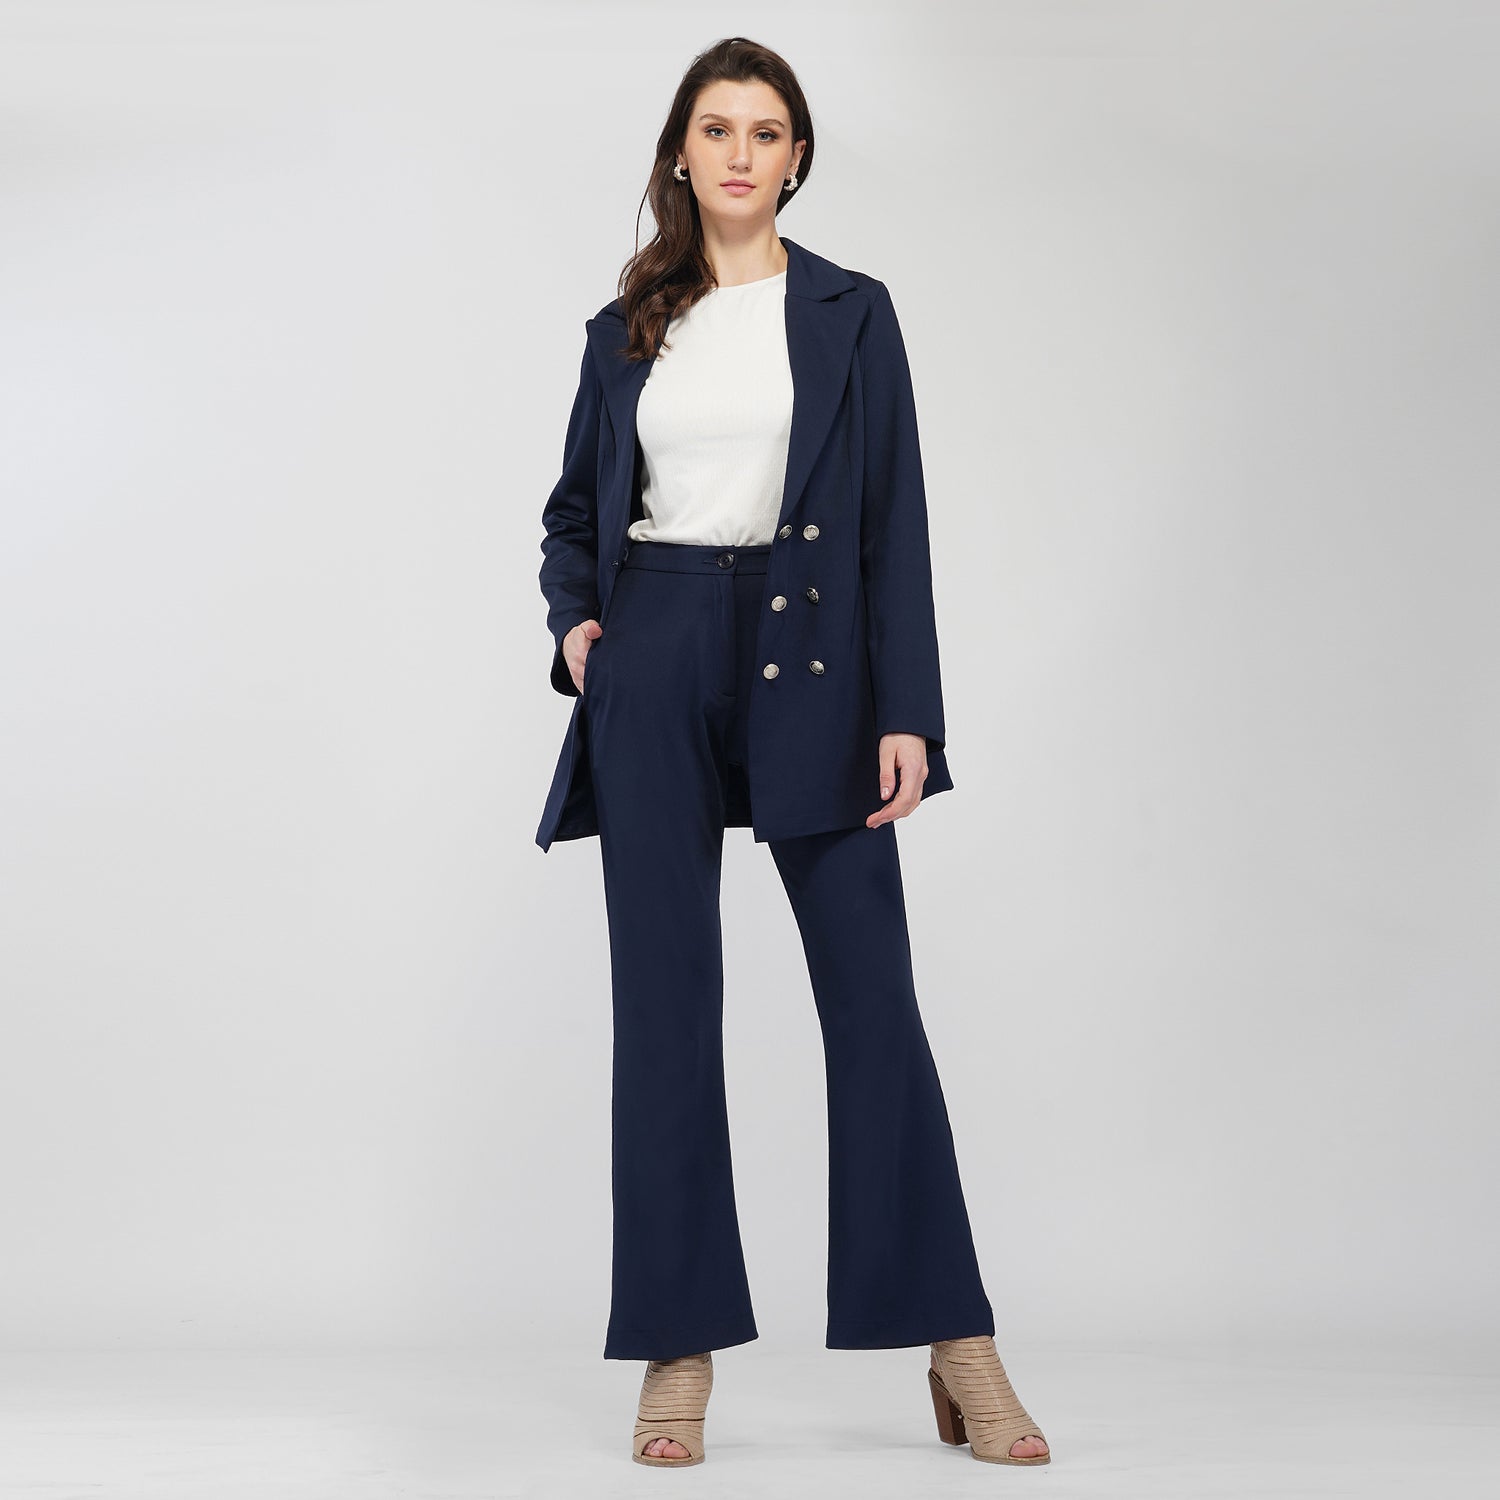 Buy Women's Suit 2 Piece Business Blazer Pants Suit Sets Slim Fit for Work  Professional, Black, X-Large at Amazon.in